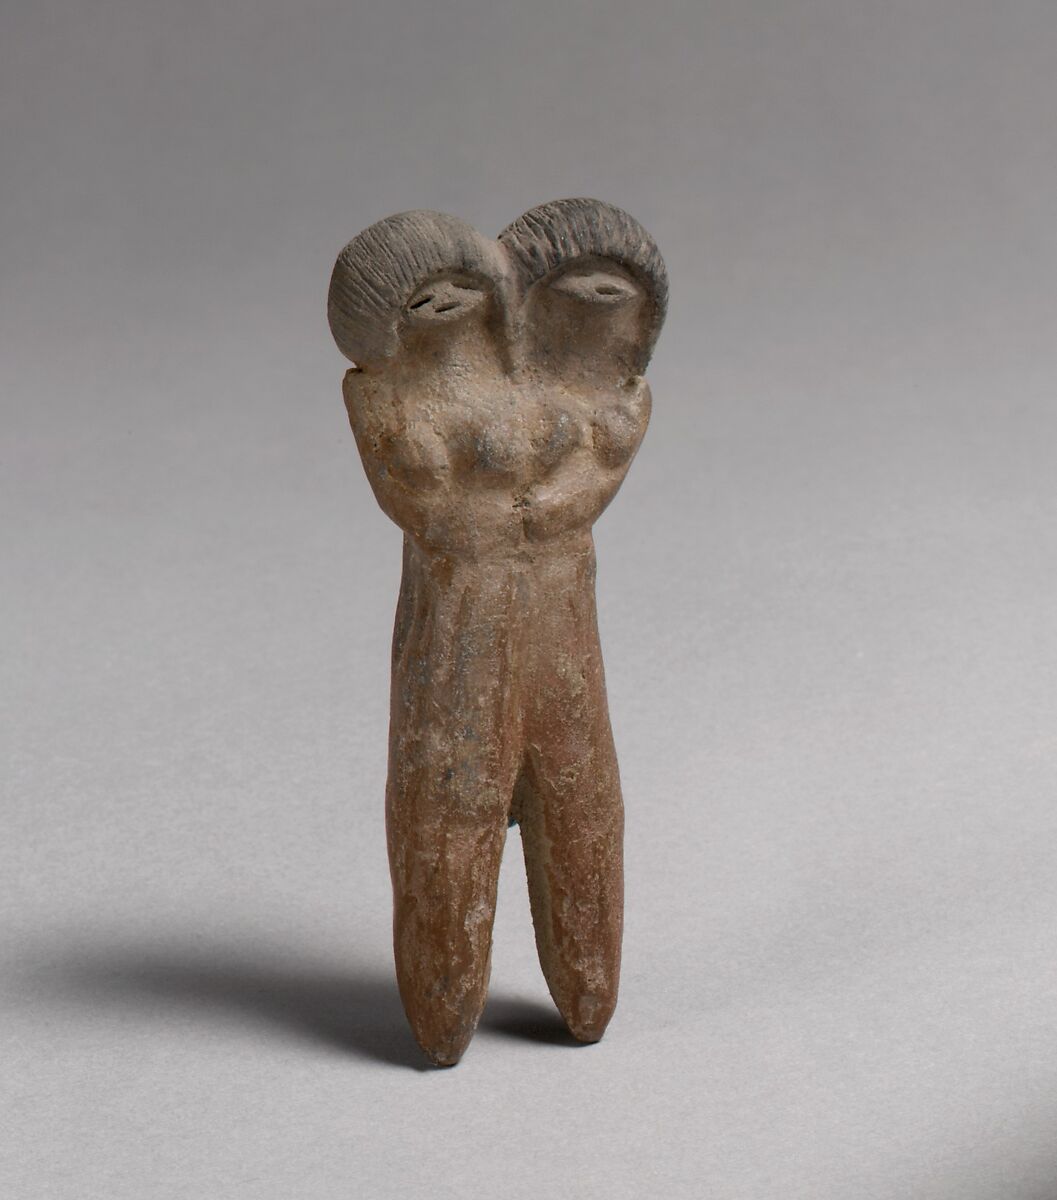 Double-headed figure, Ceramic, Valdivia 